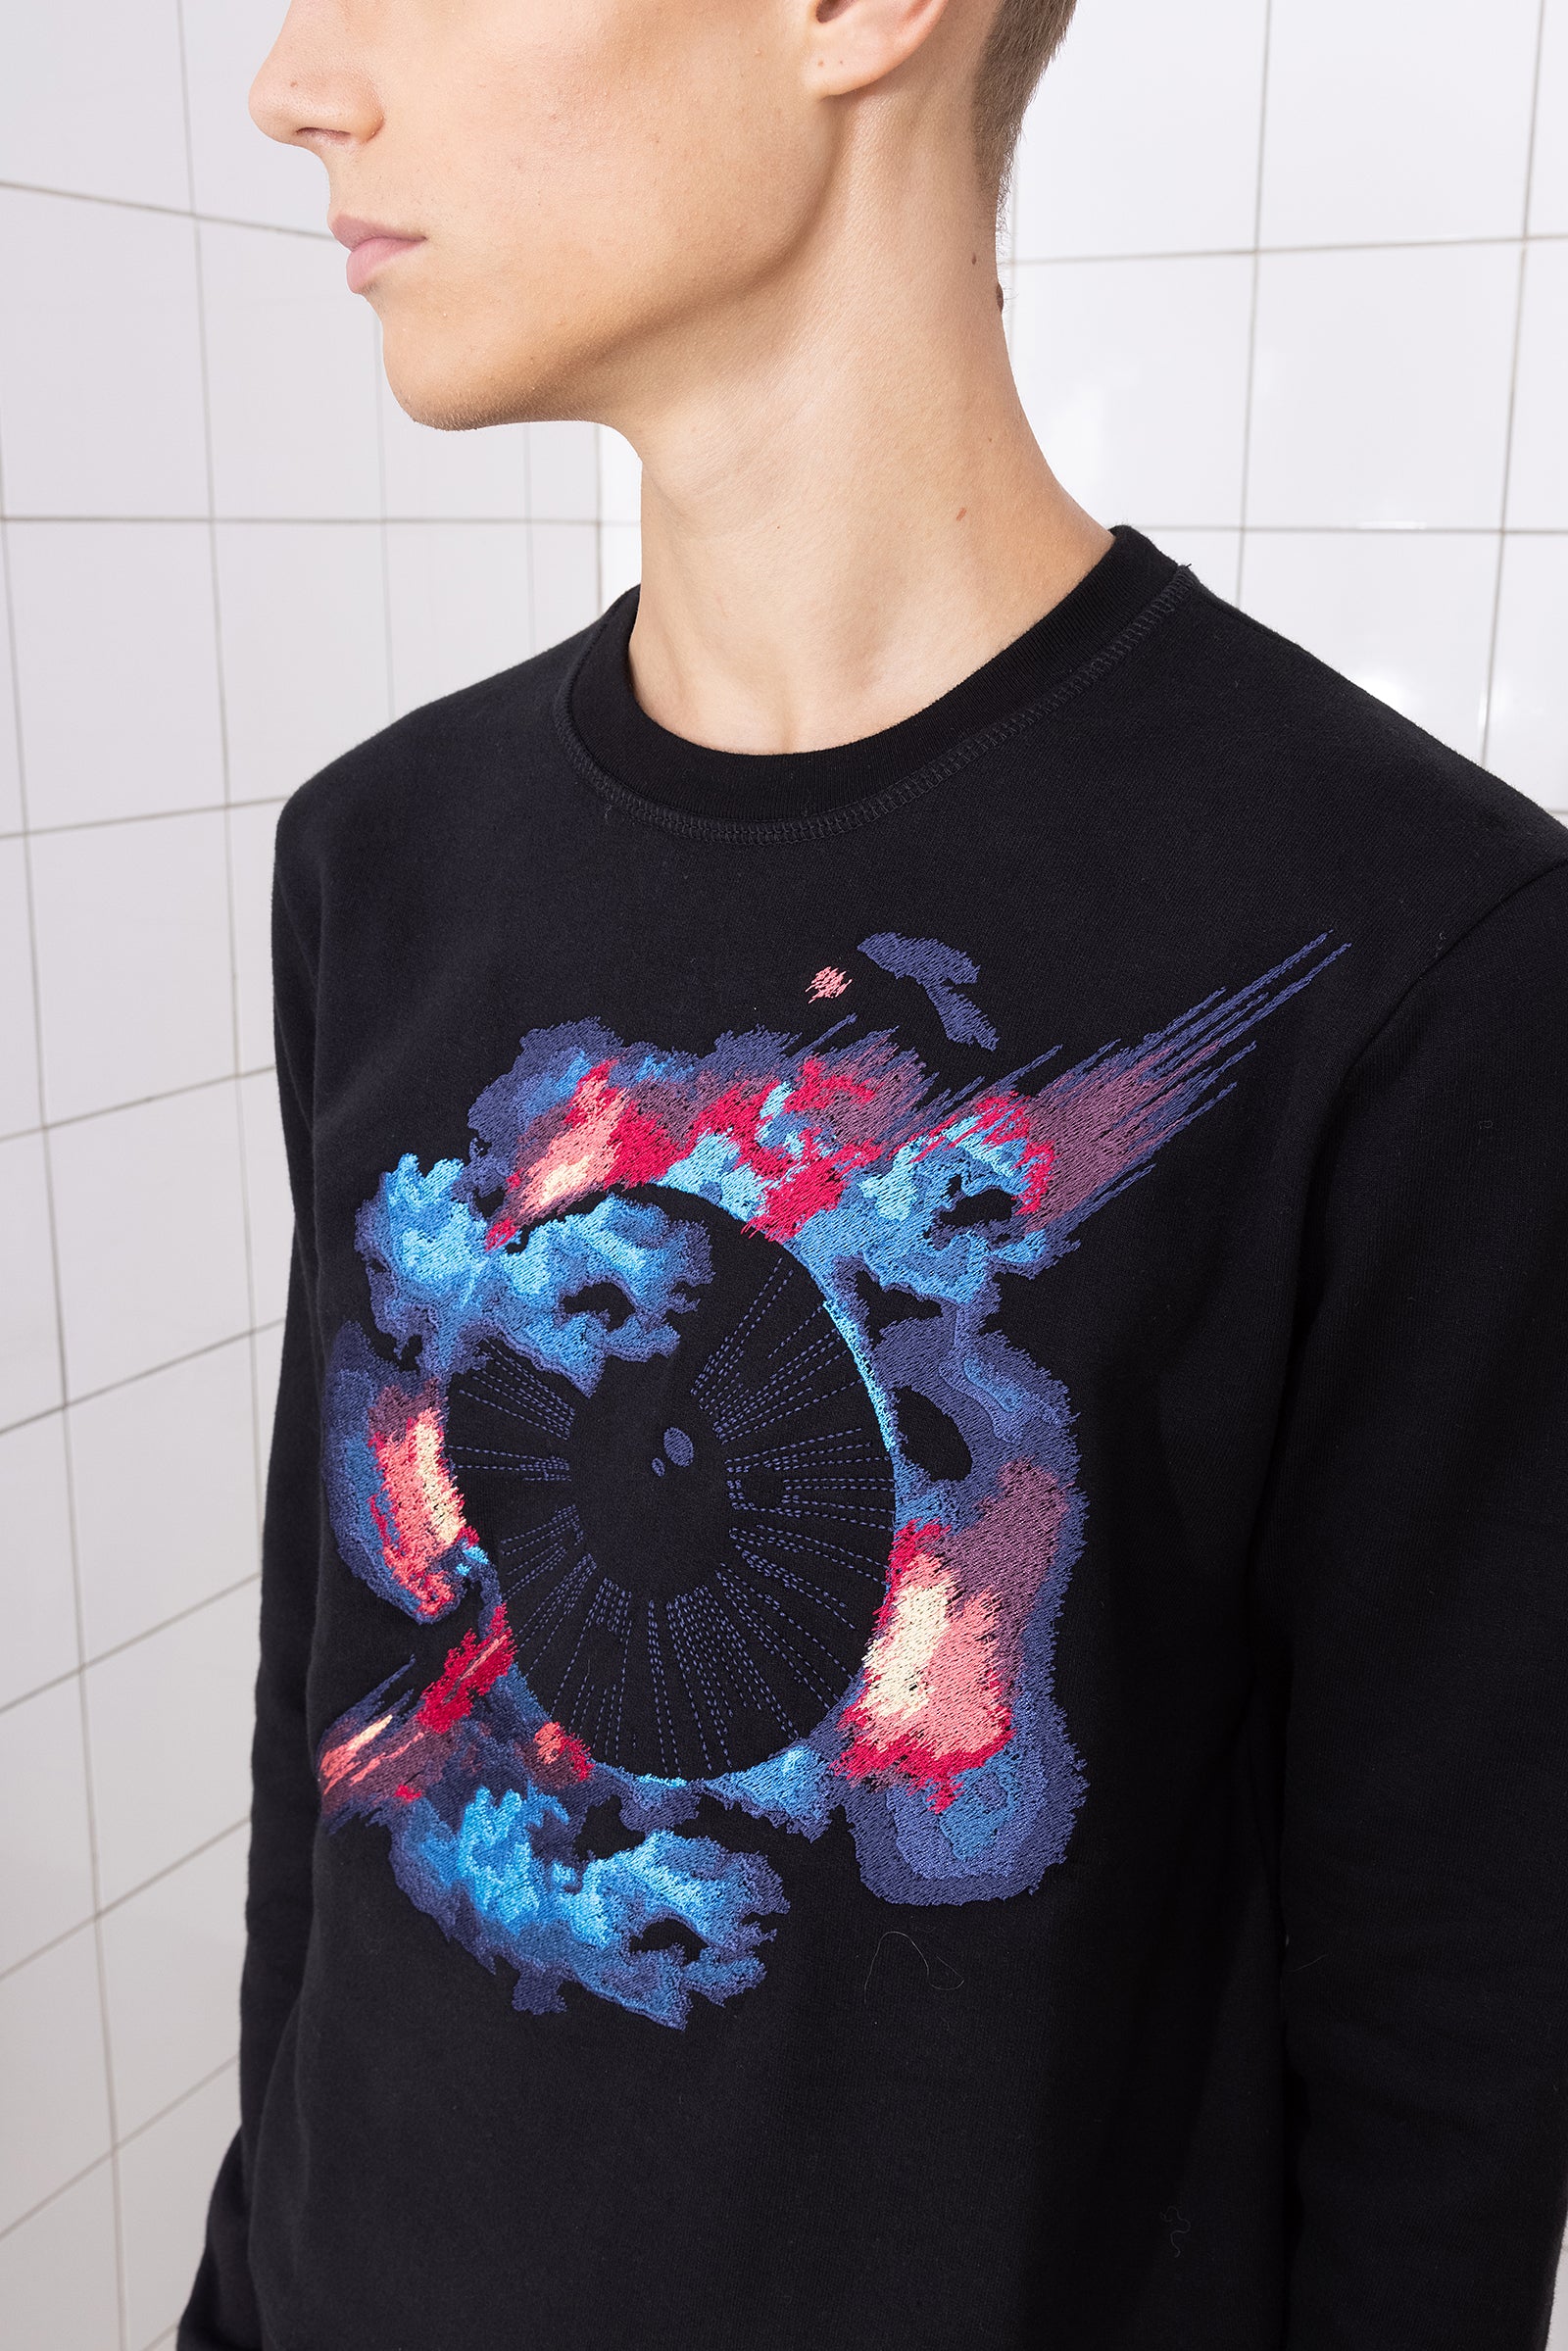 Cosmo multicolored embroidered sweatshirt eye detailed craftsmanship Stylish man